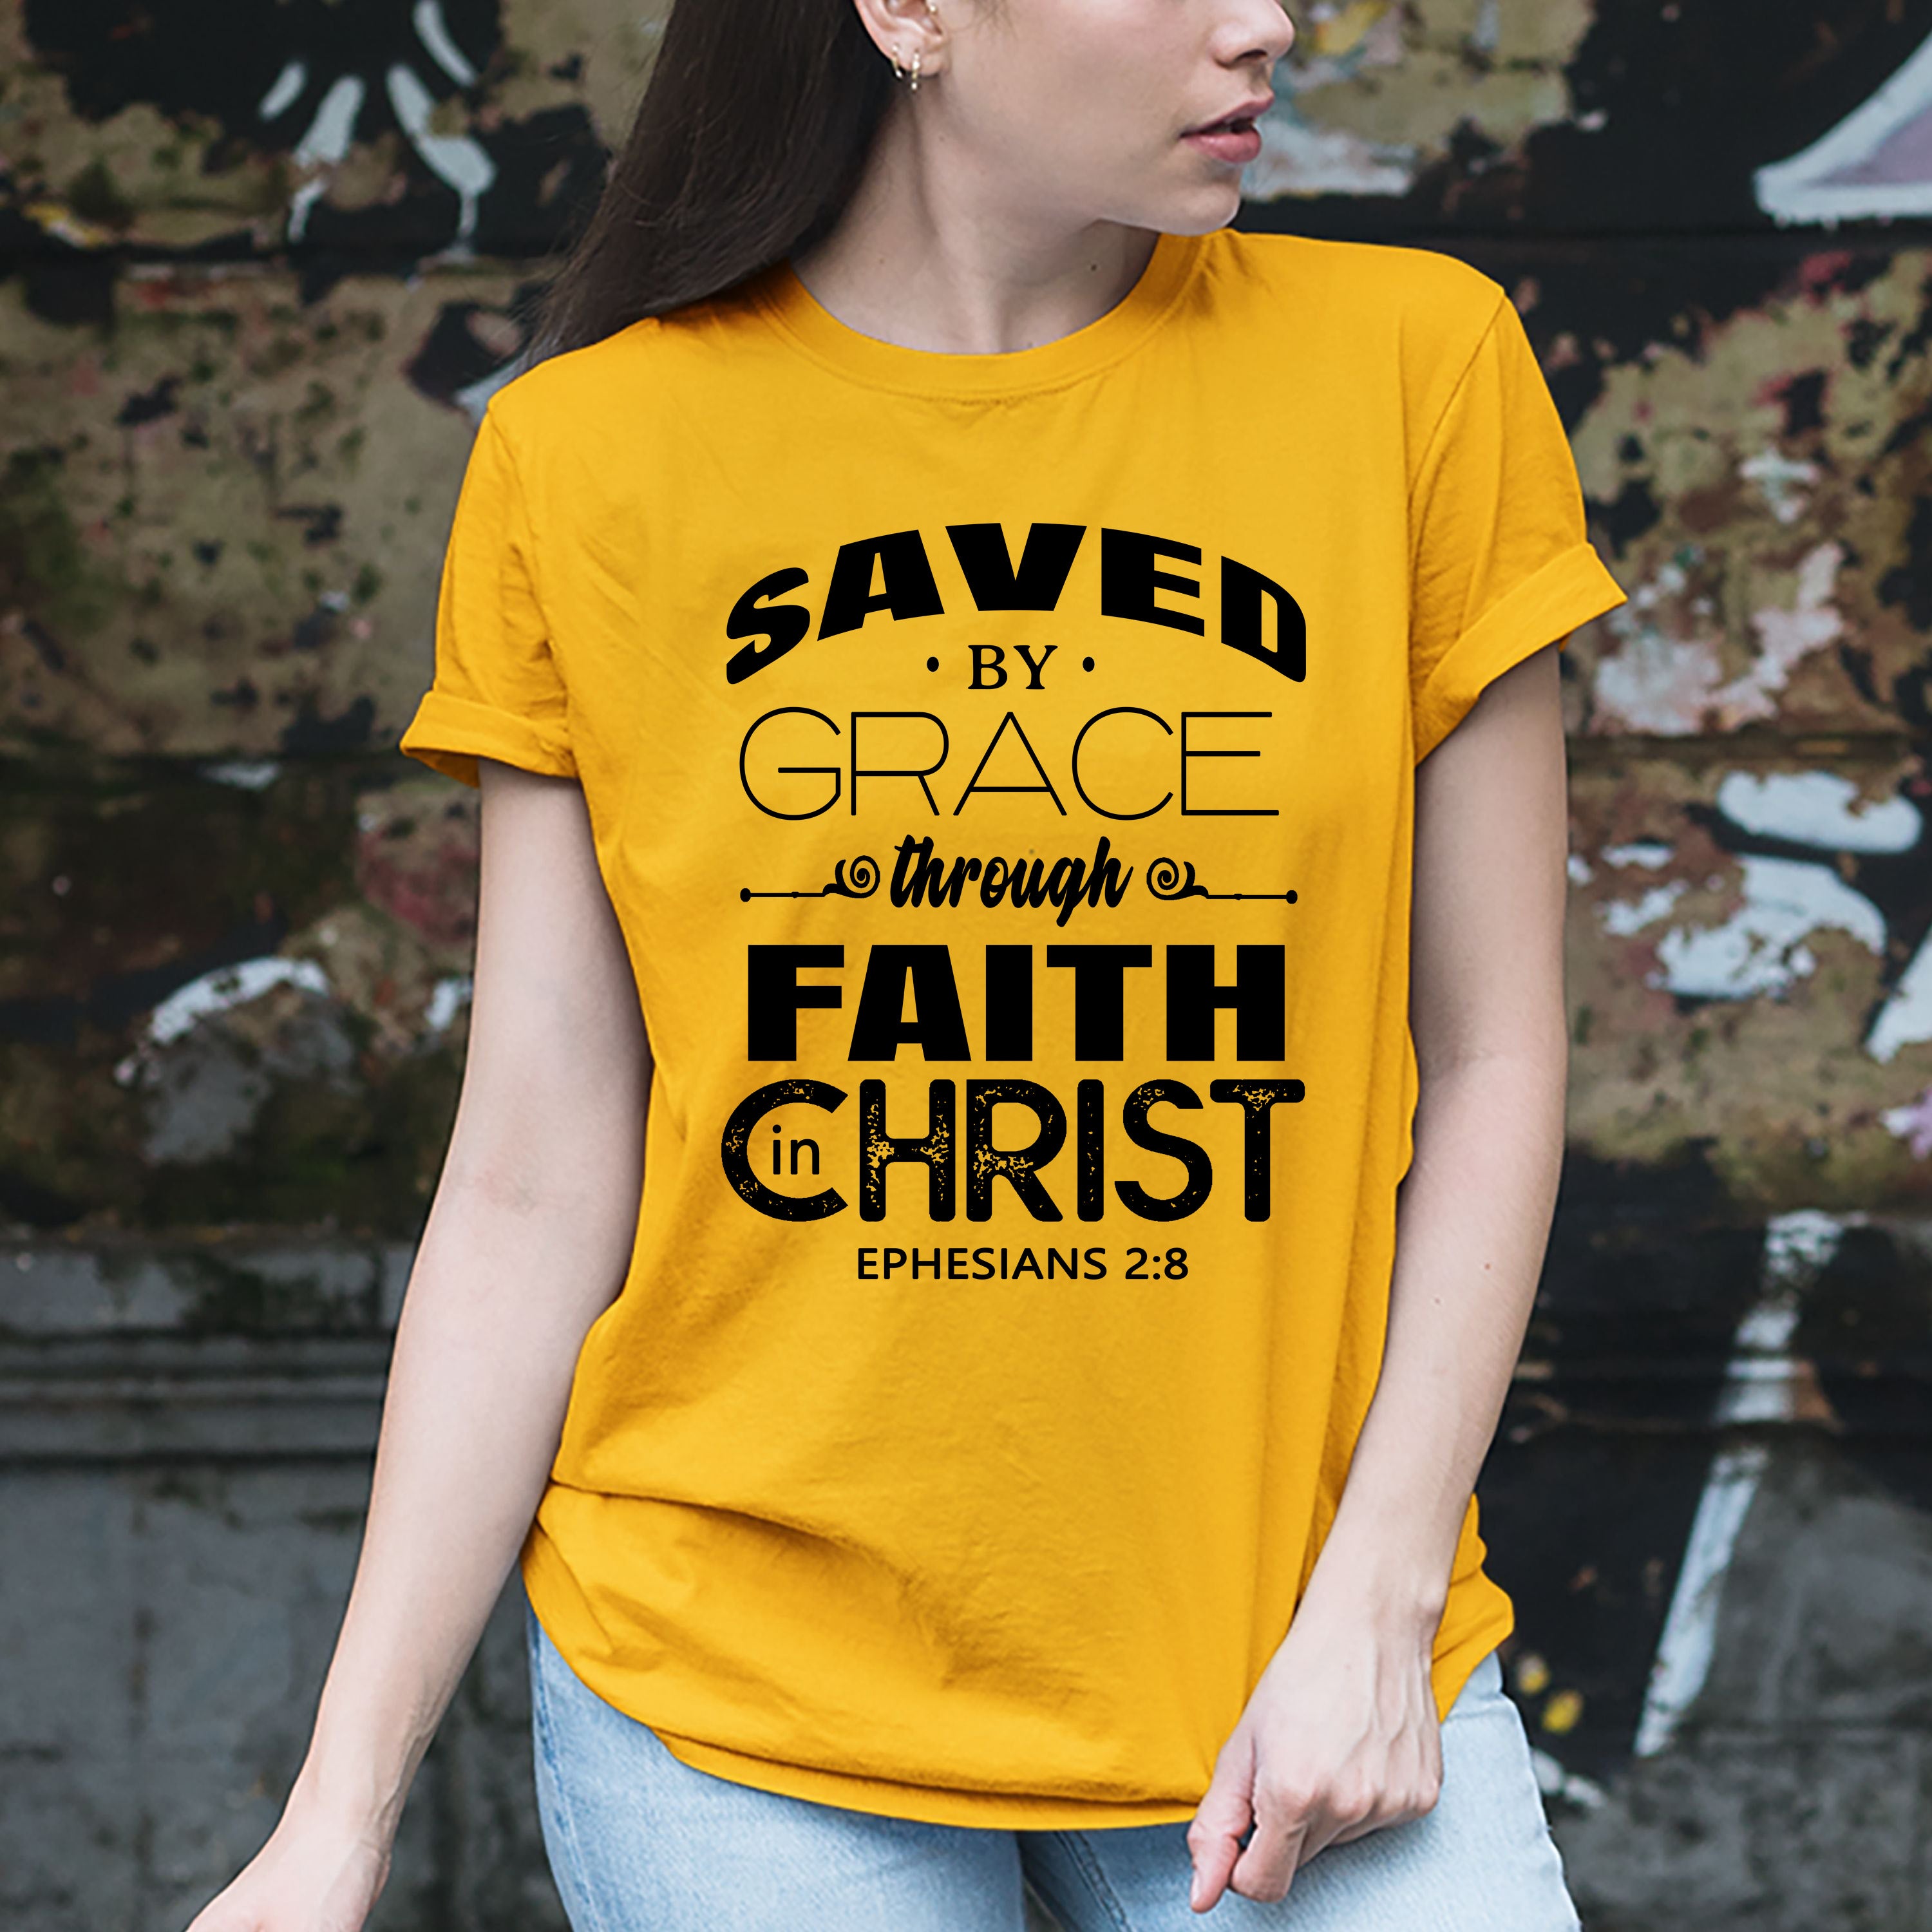 "SAVED BY GRACE THROUGH FAITH IN CHRIST".